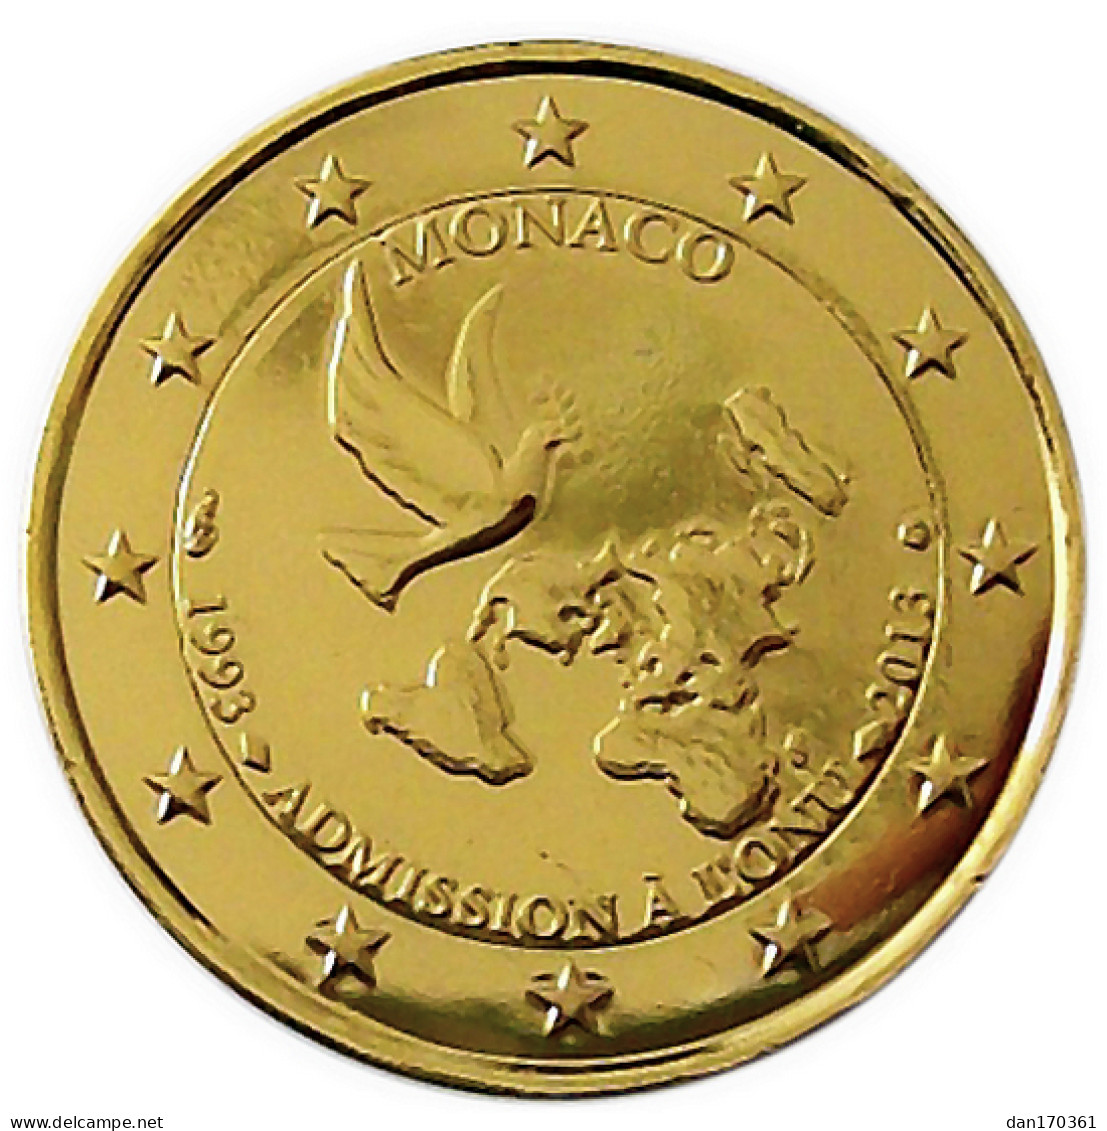 MONACO 2013 -  ADMISSION A L'O N U - 2 EUROS COMMEMORATIVE - PLAQUE OR  - VERGOLDET - Monaco